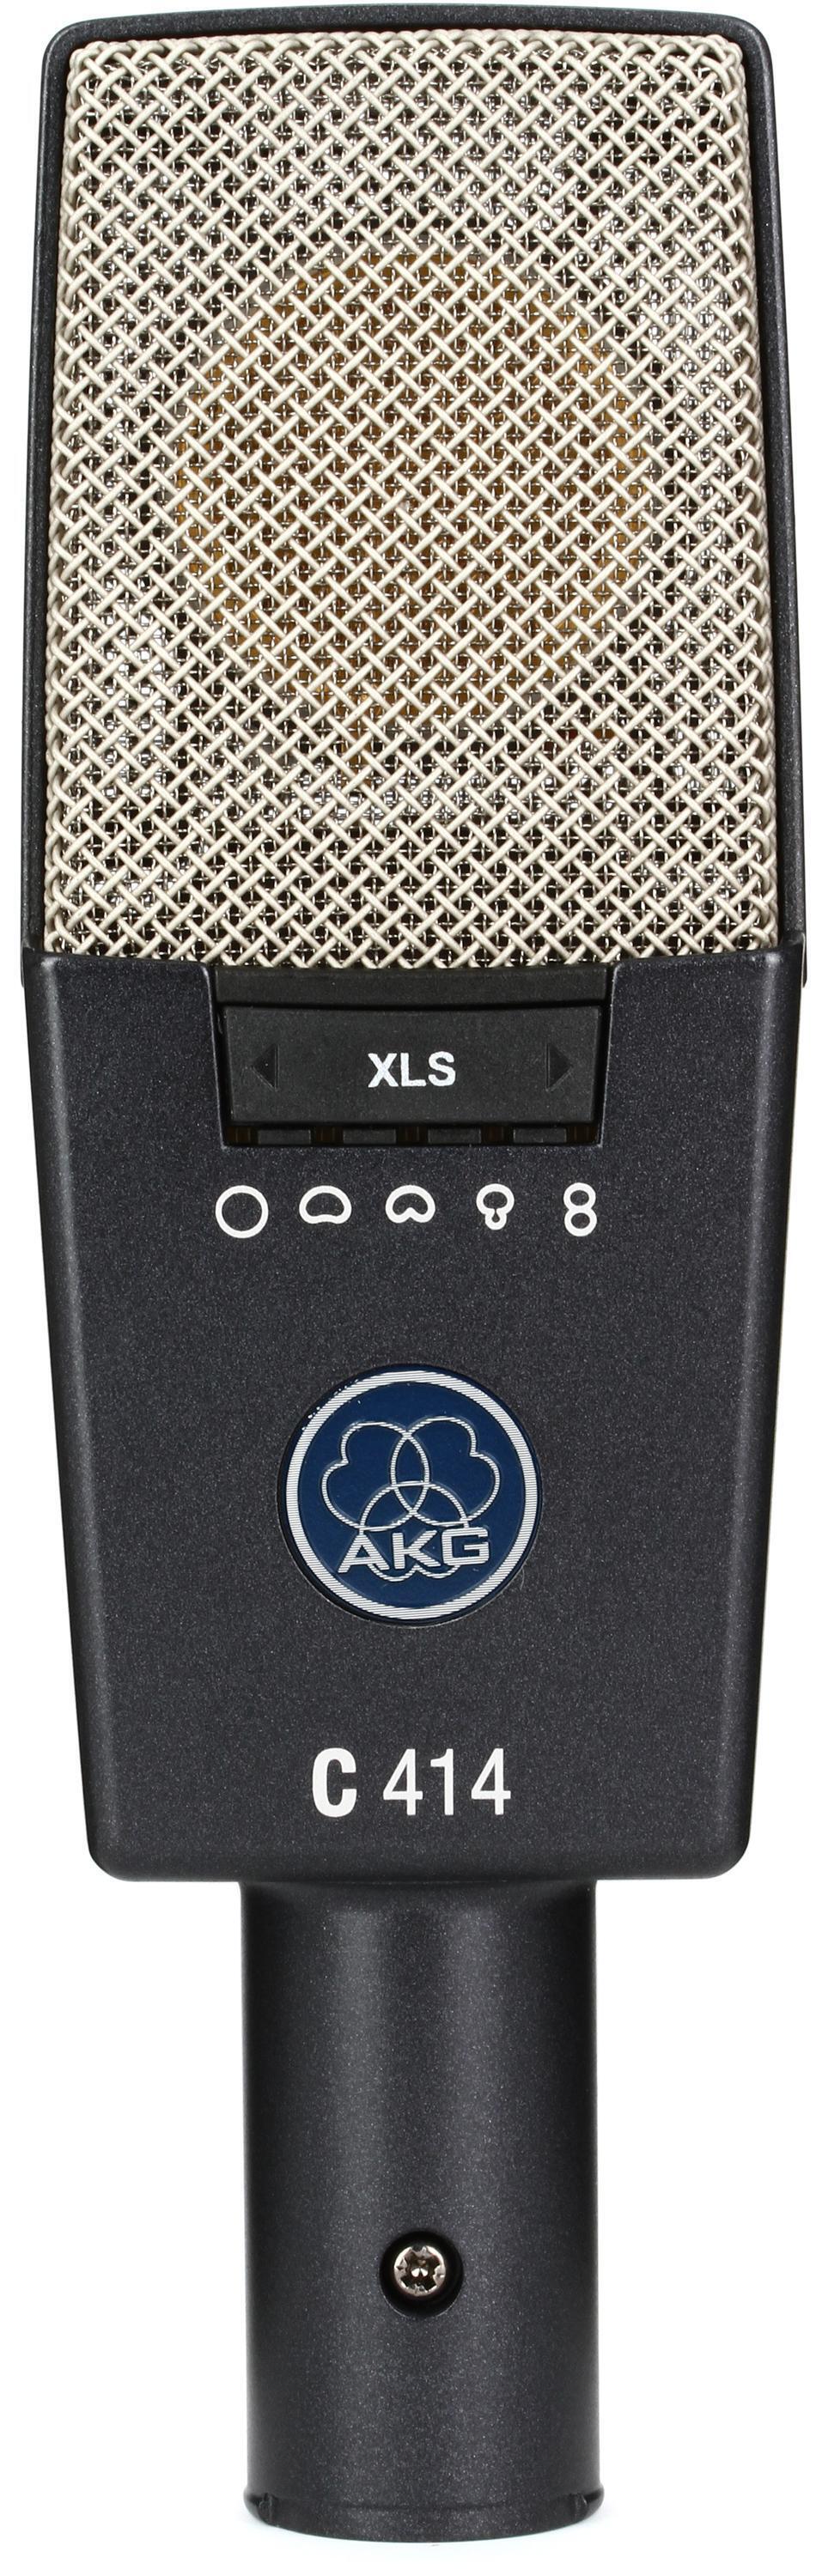 AKG C 414 XLS